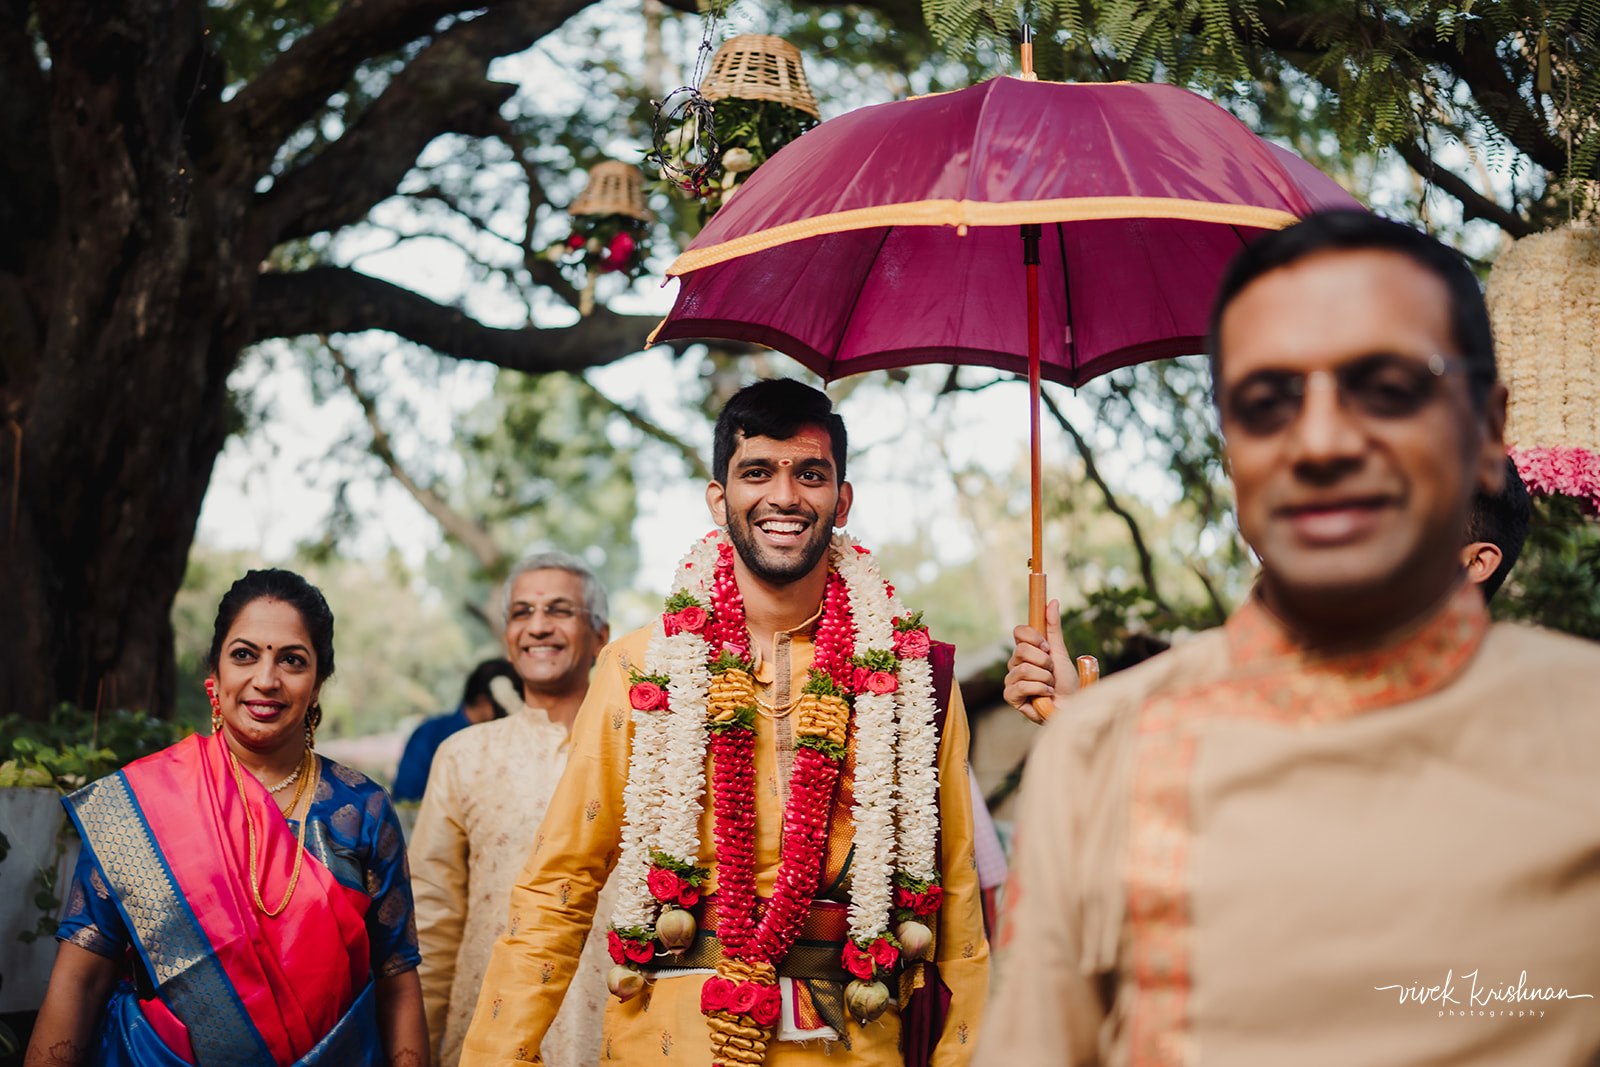 kashi yatra South Indian wedding culture